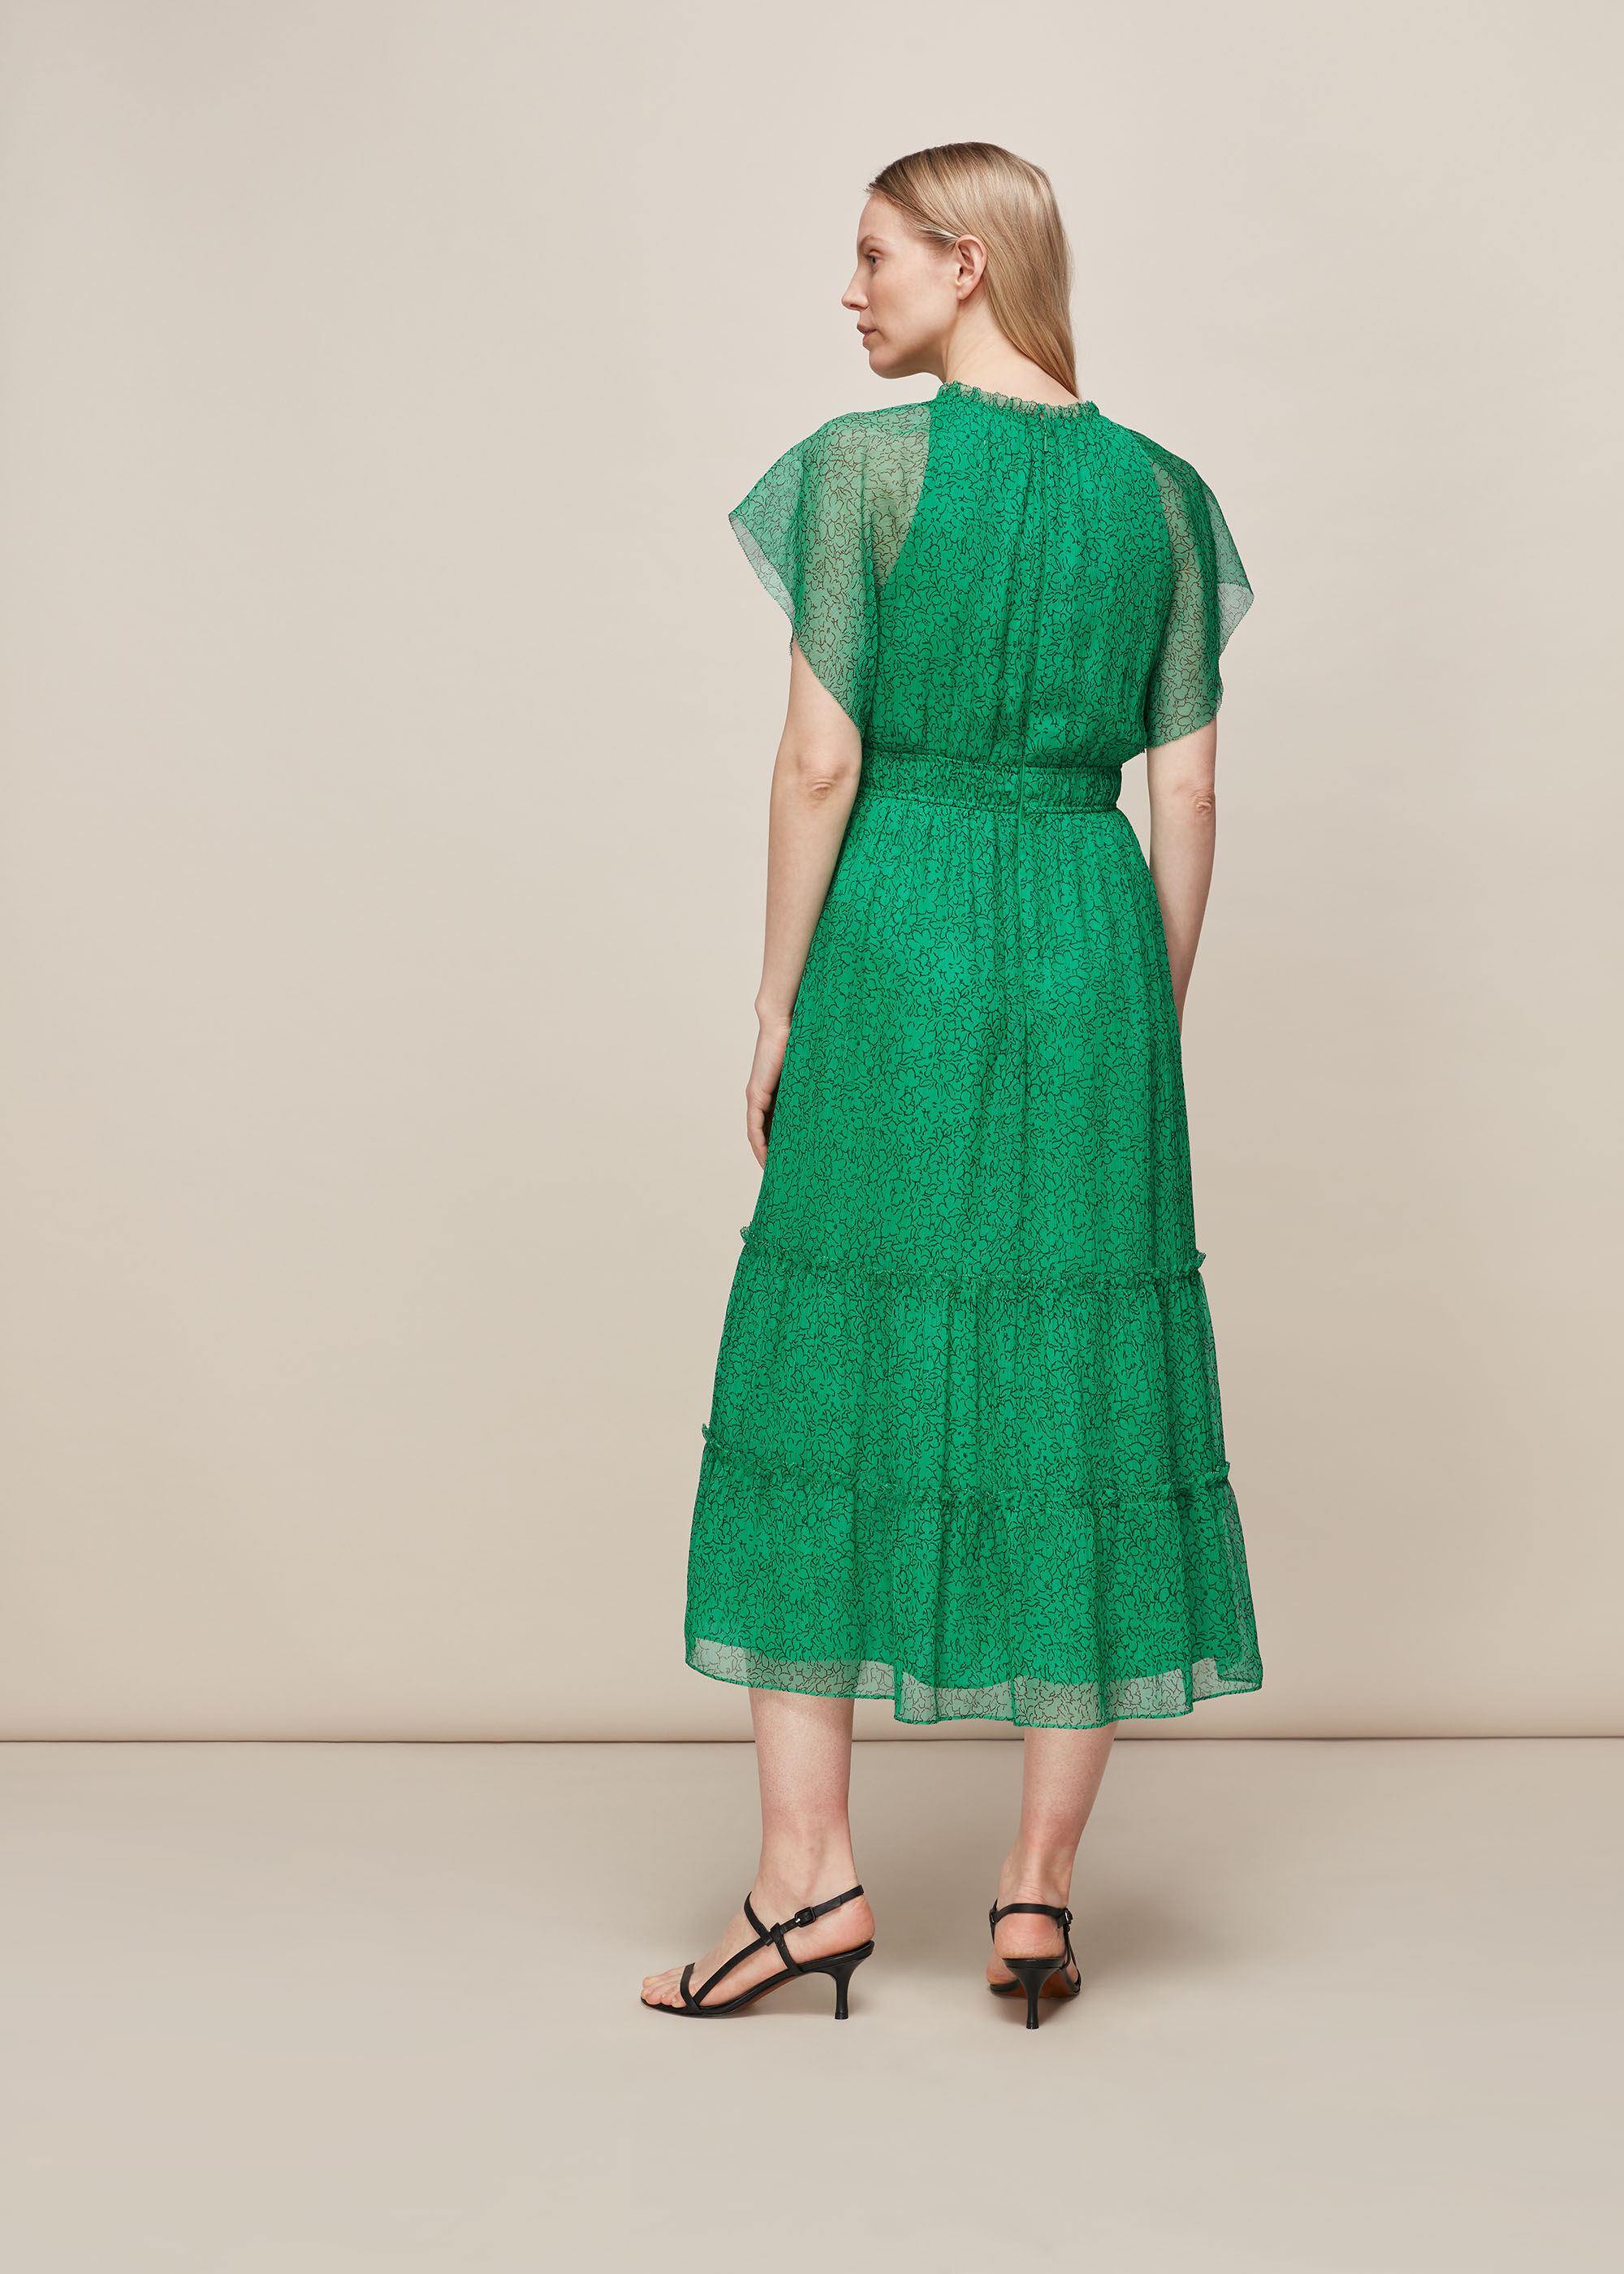 green frill dress